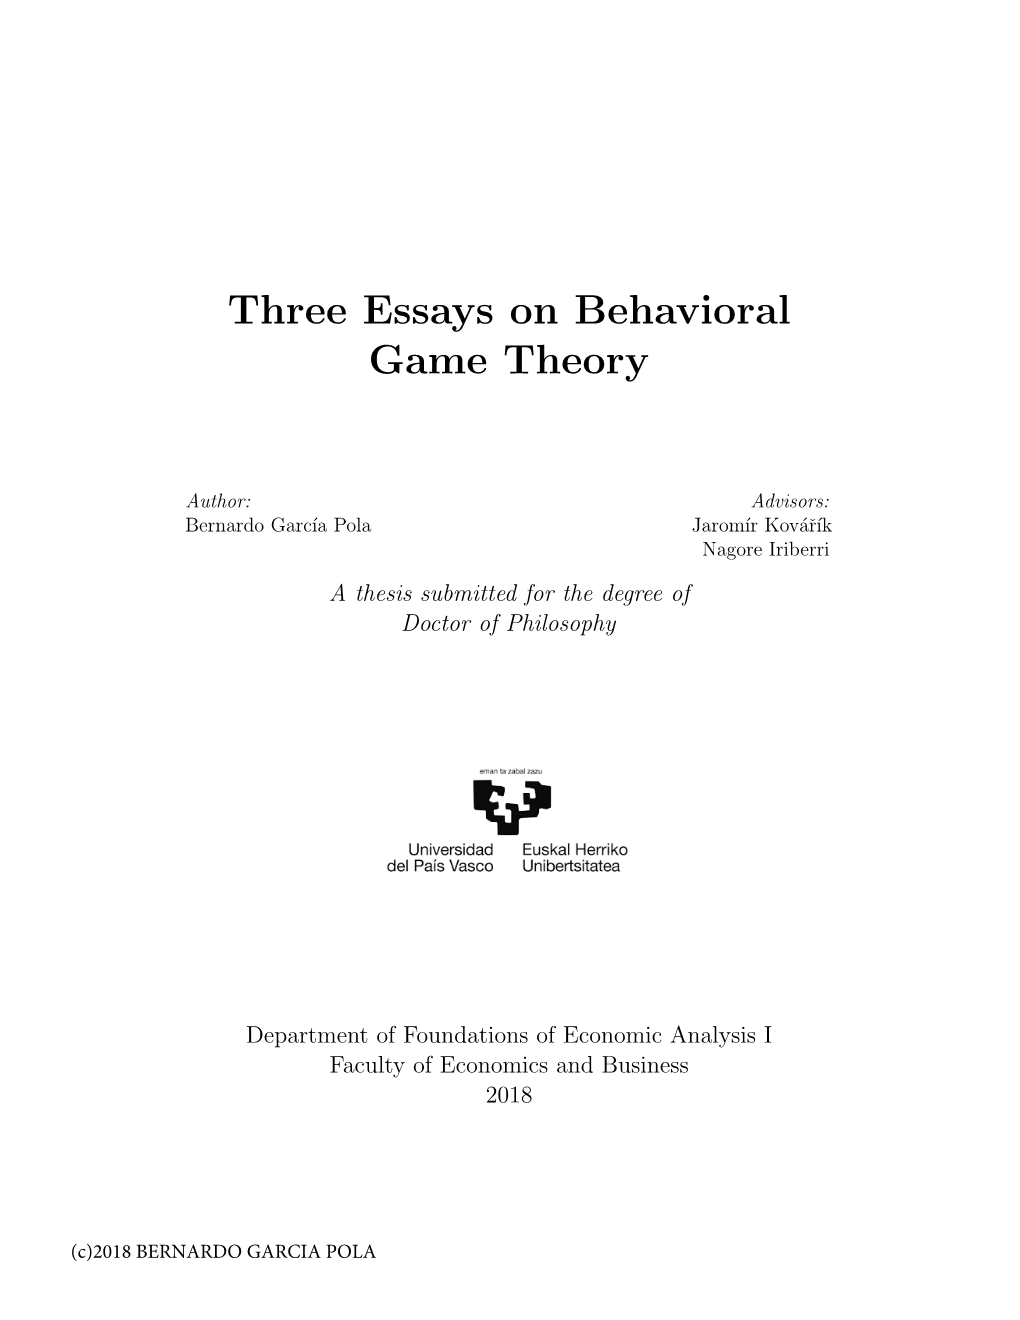 Three Essays on Behavioral Game Theory